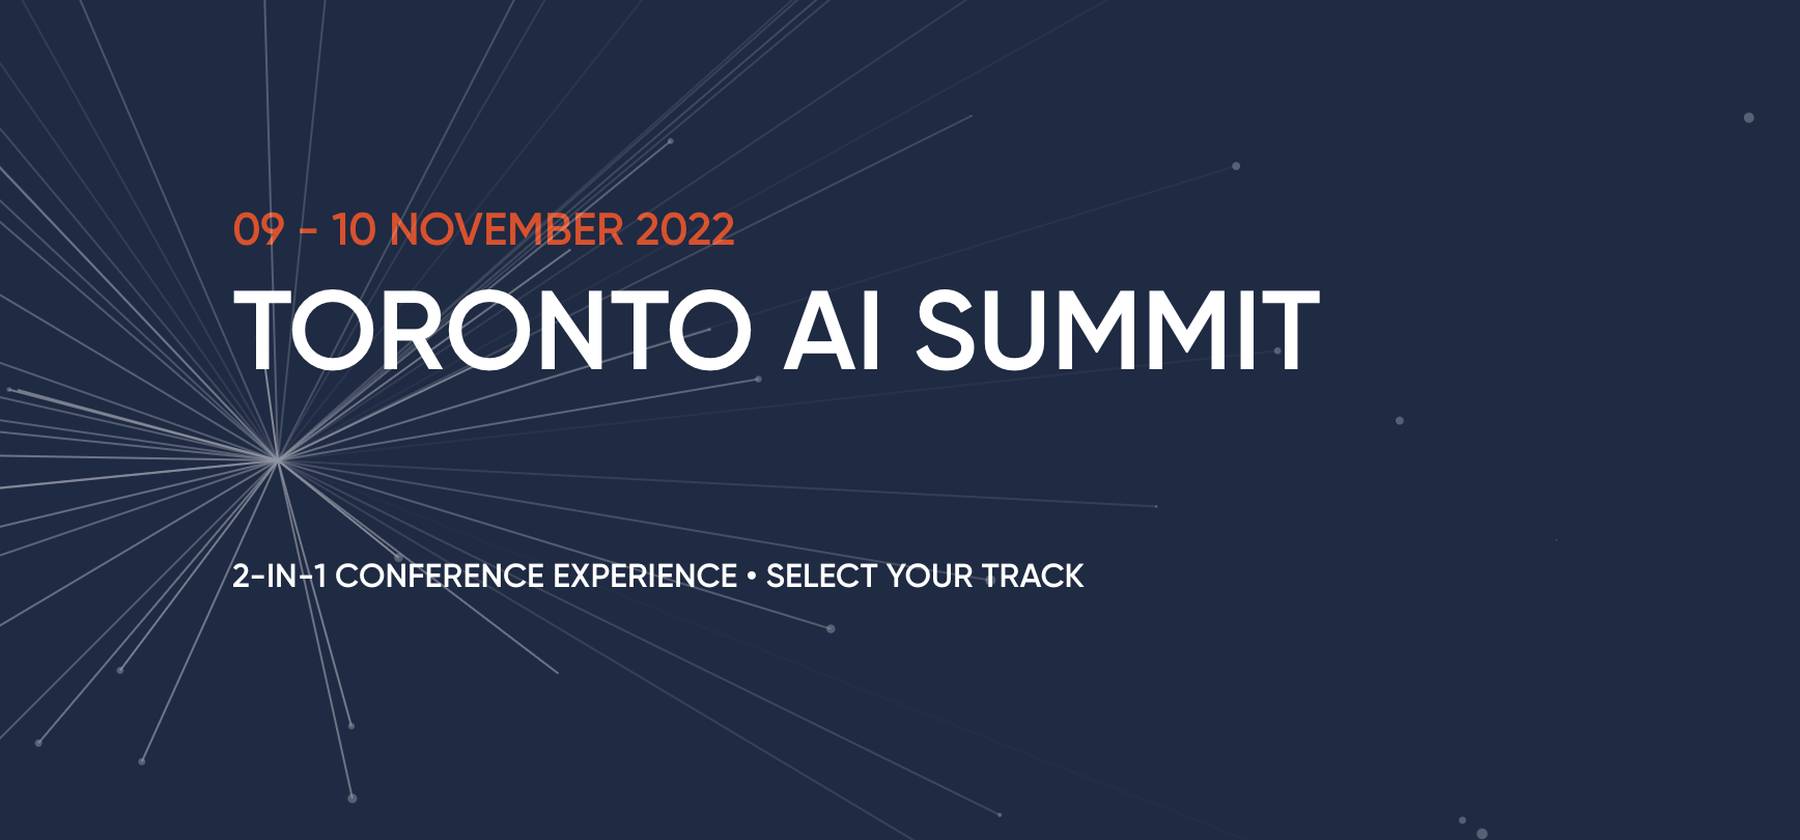 Toronto AI Summit 2022